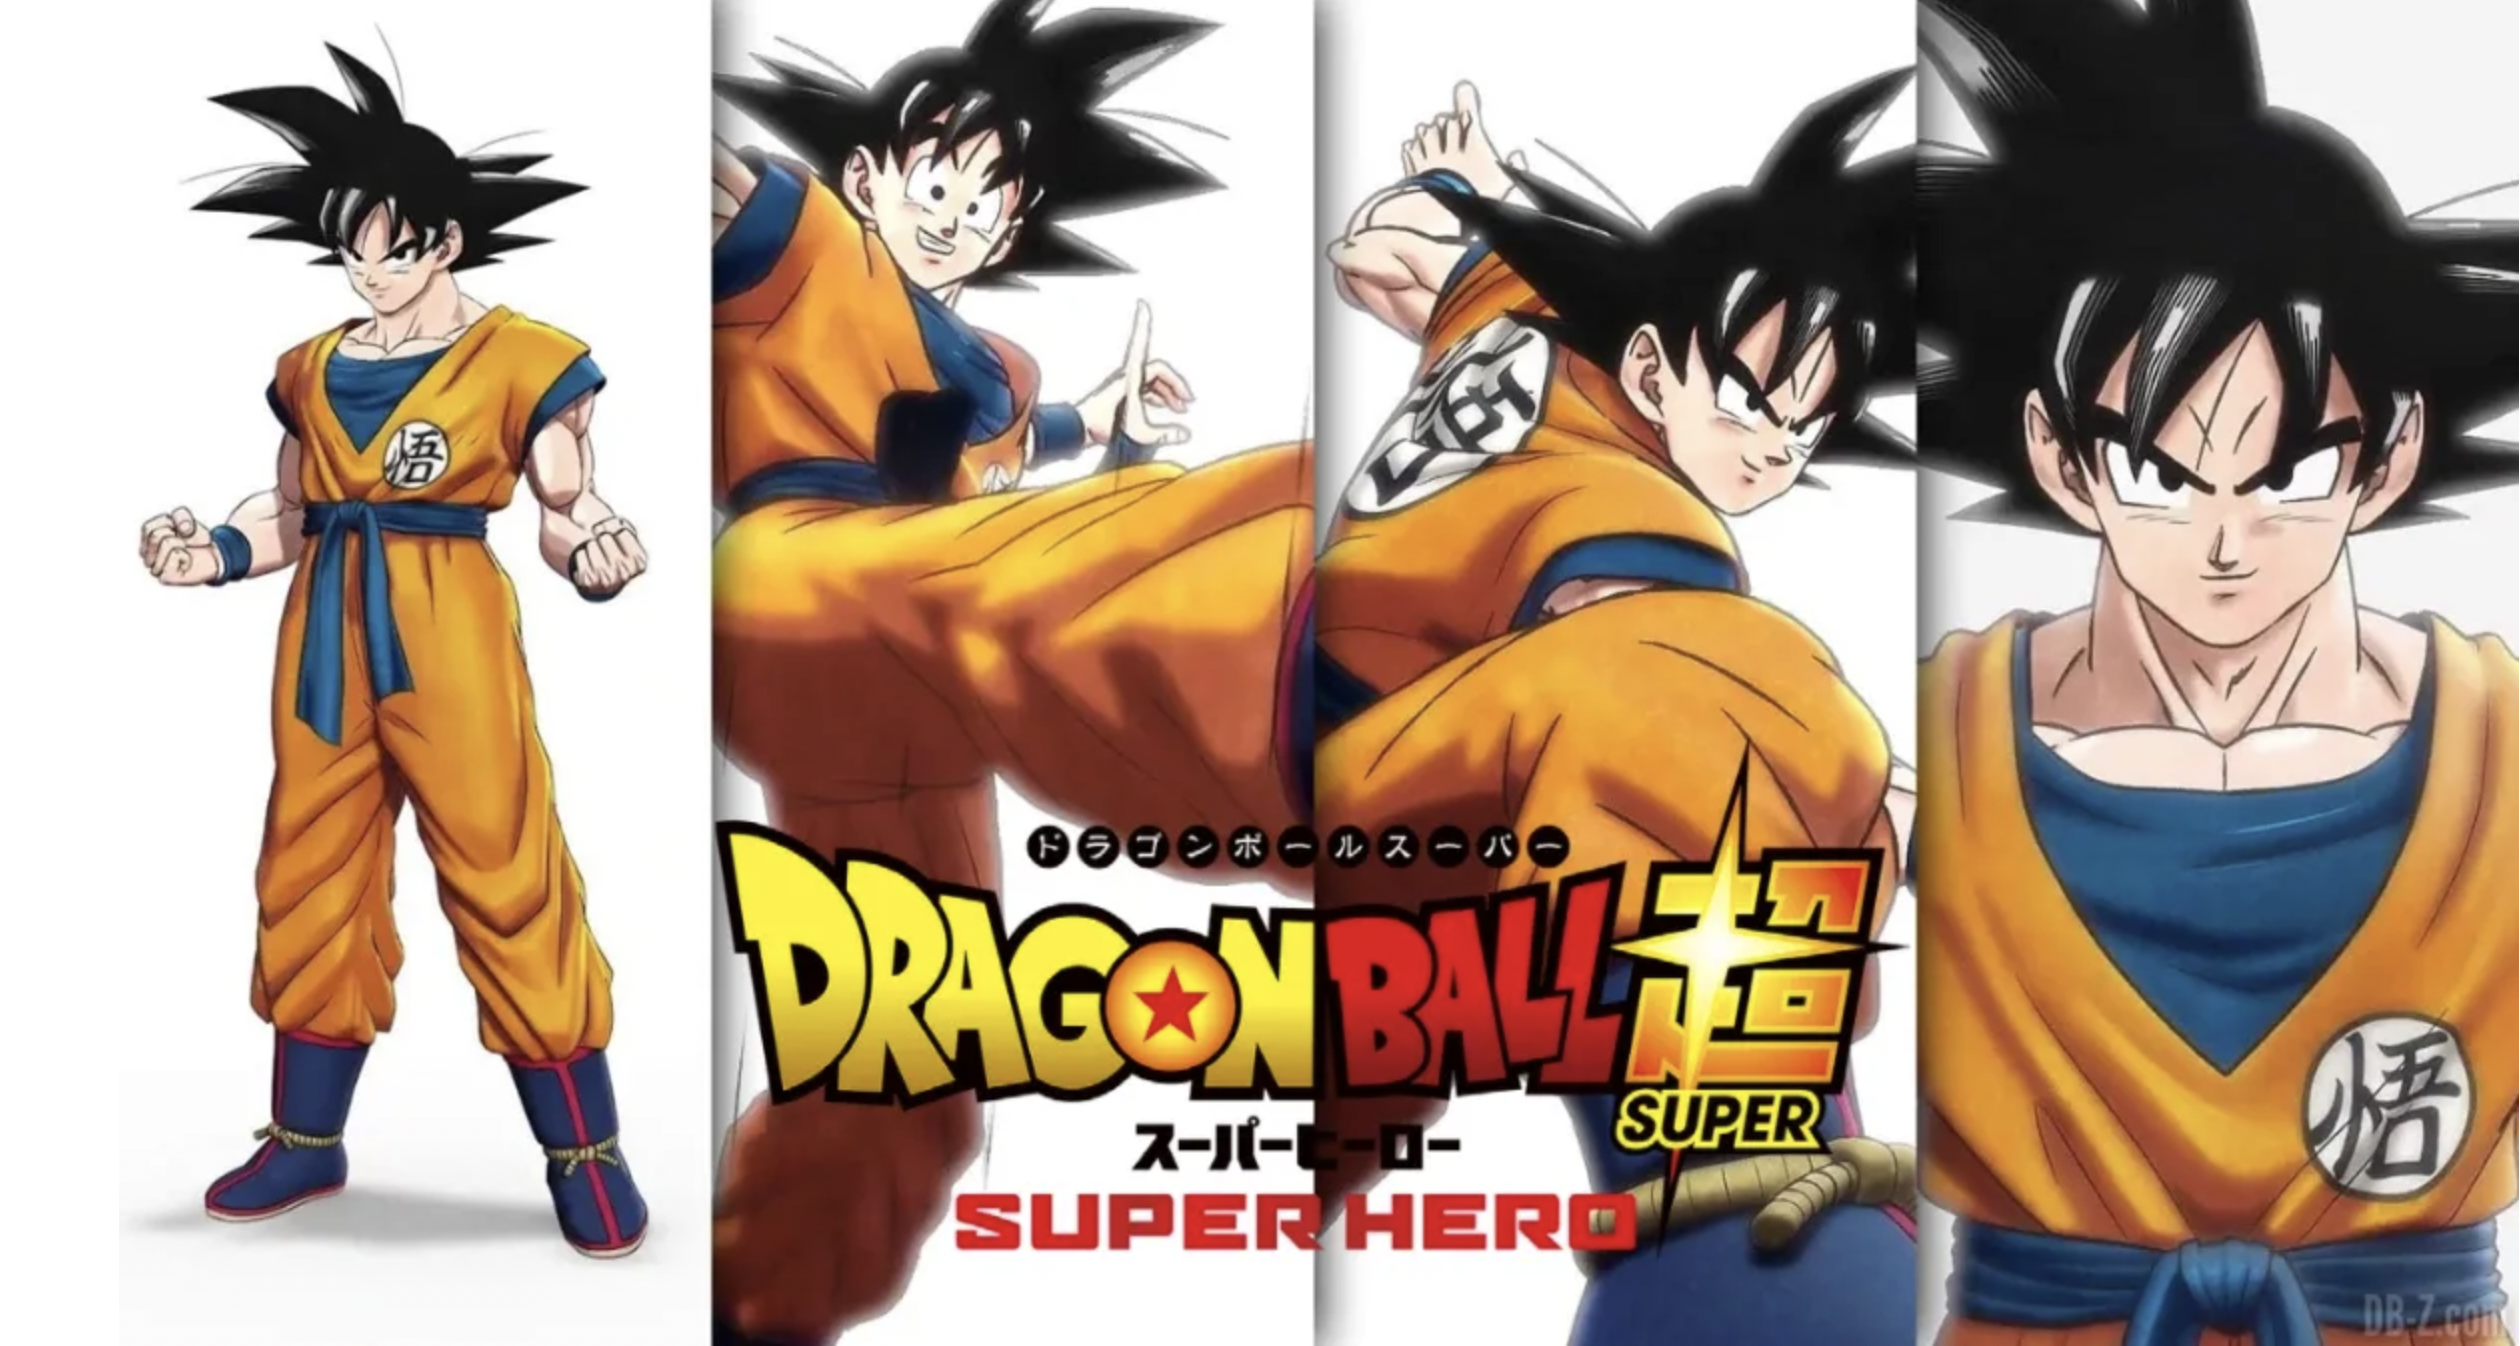 Dragon Ball Super: Super Hero se destaca entre as estreias da